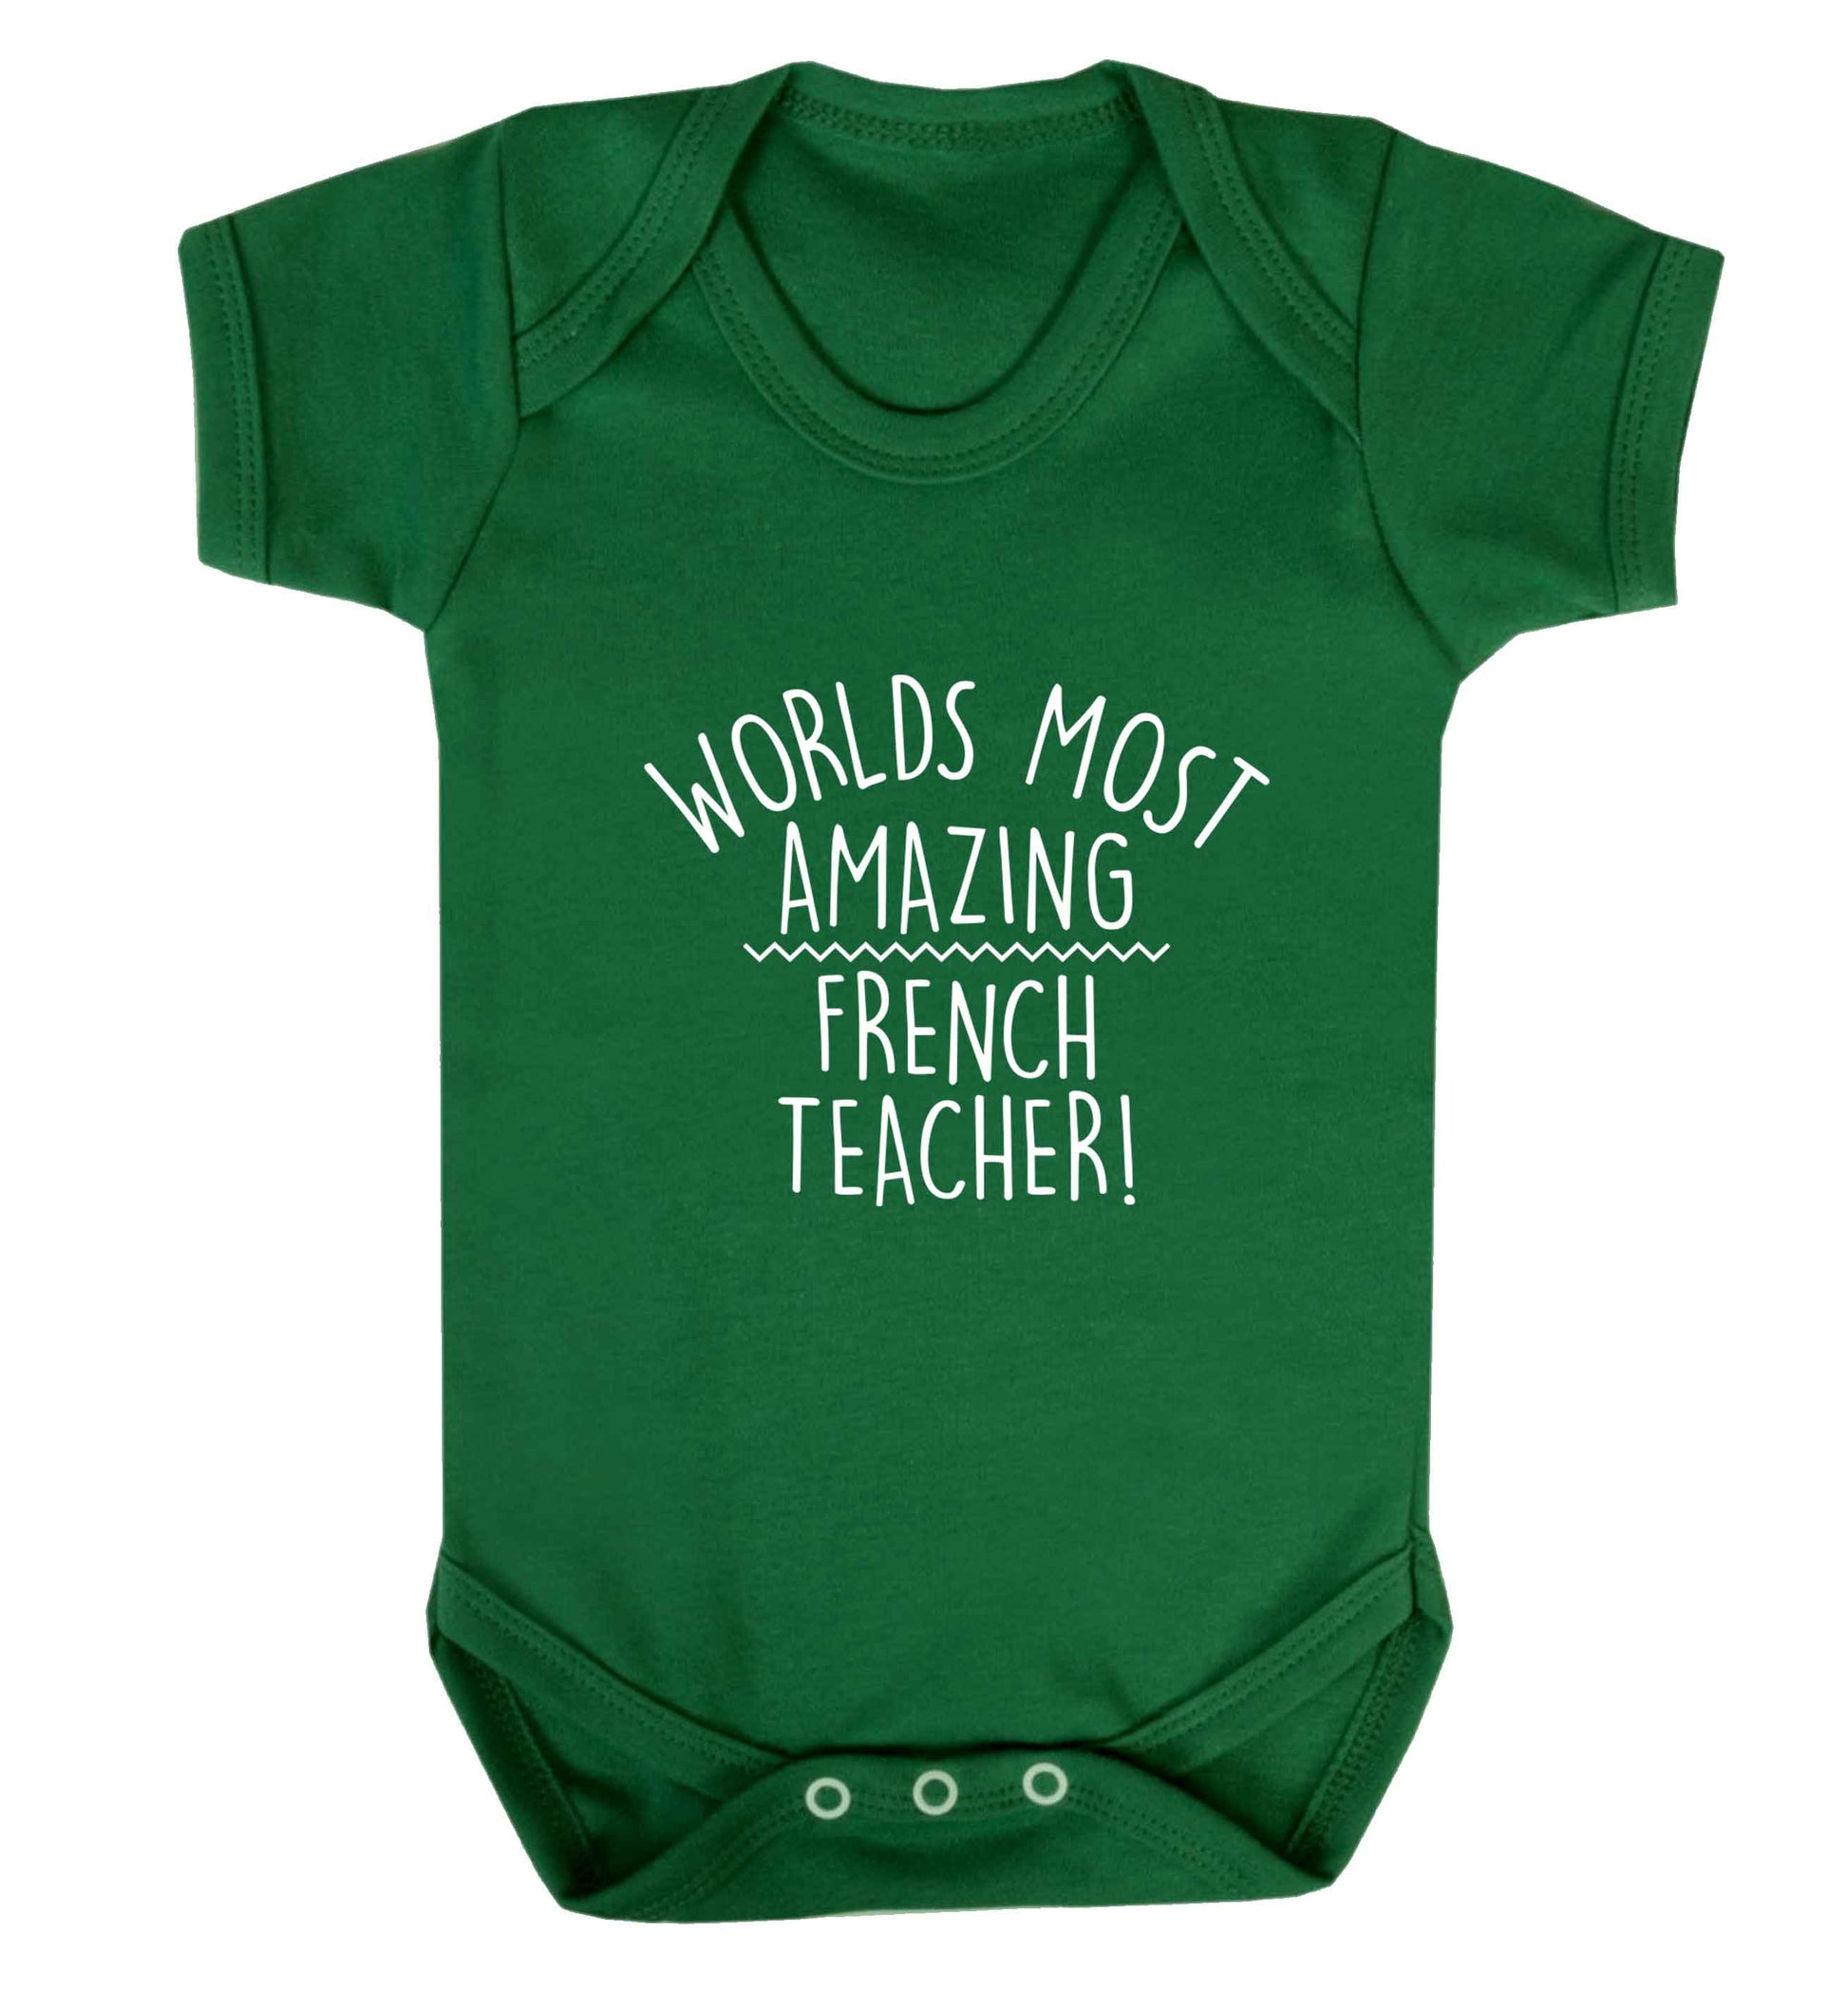 Worlds most amazing French teacher baby vest green 18-24 months